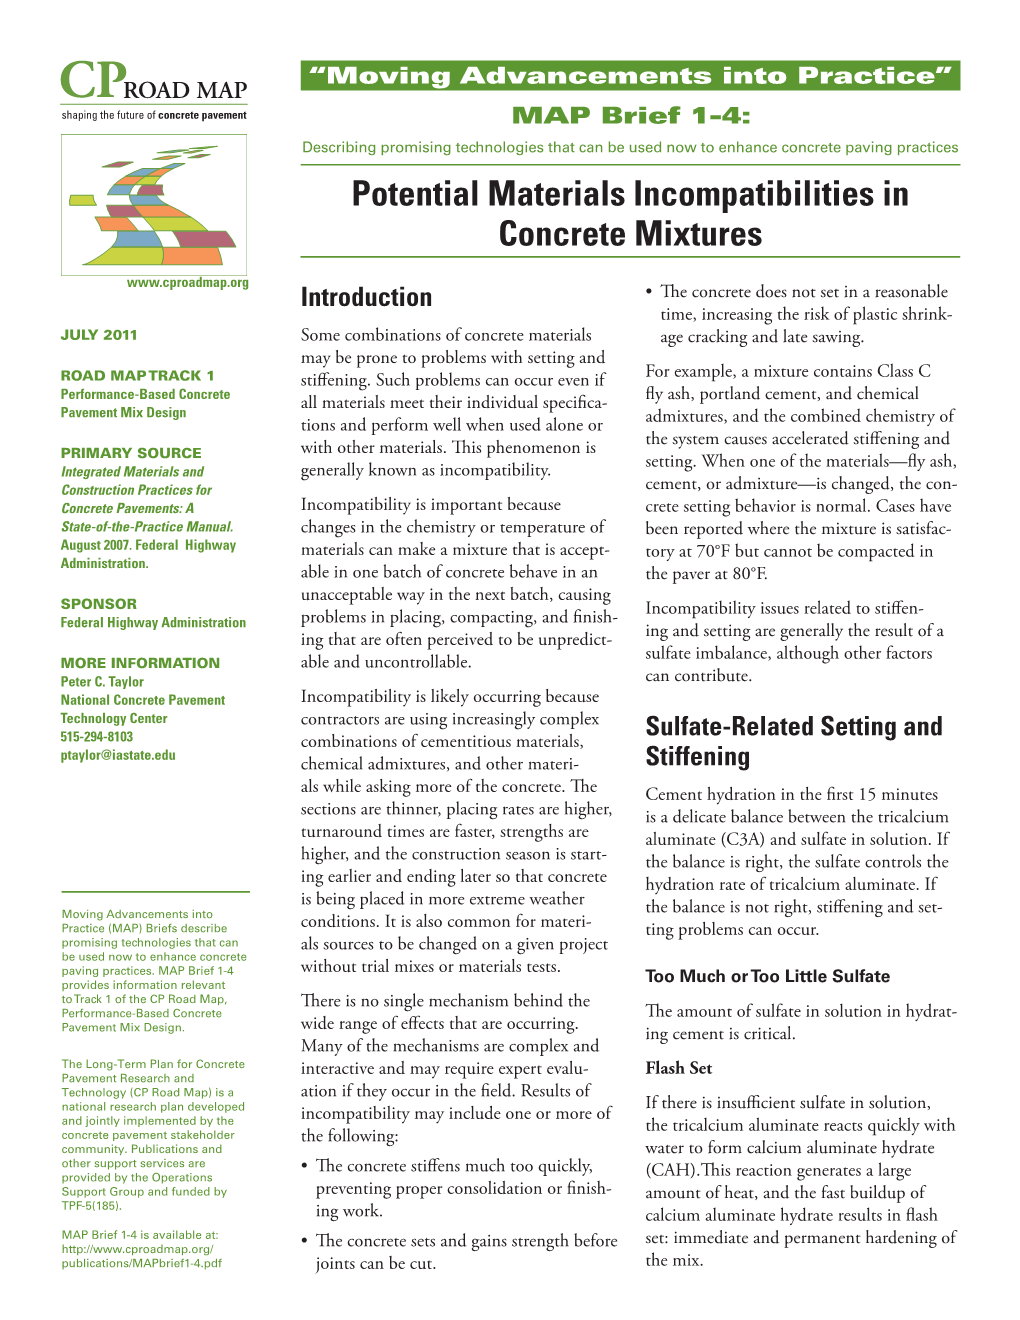 Potential Materials Incompatibilities in Concrete Mixtures